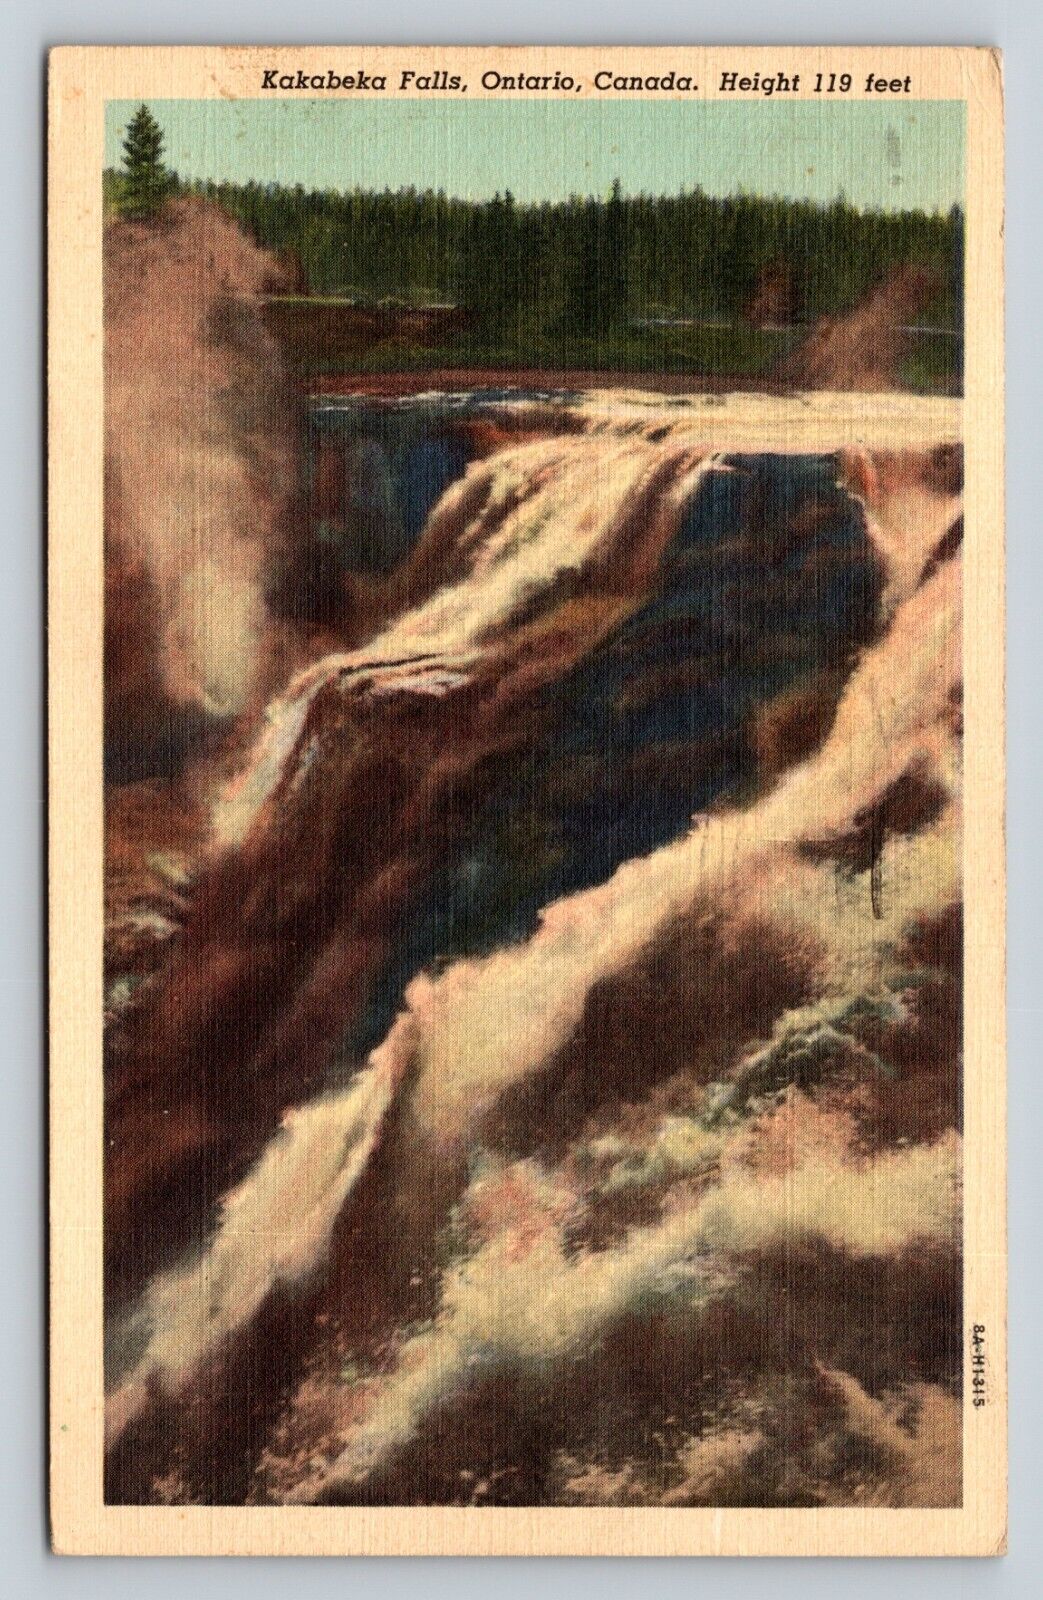 c1946 Kakabeka Falls Ontario, Canada 119 Feet High VINTAGE Postcard